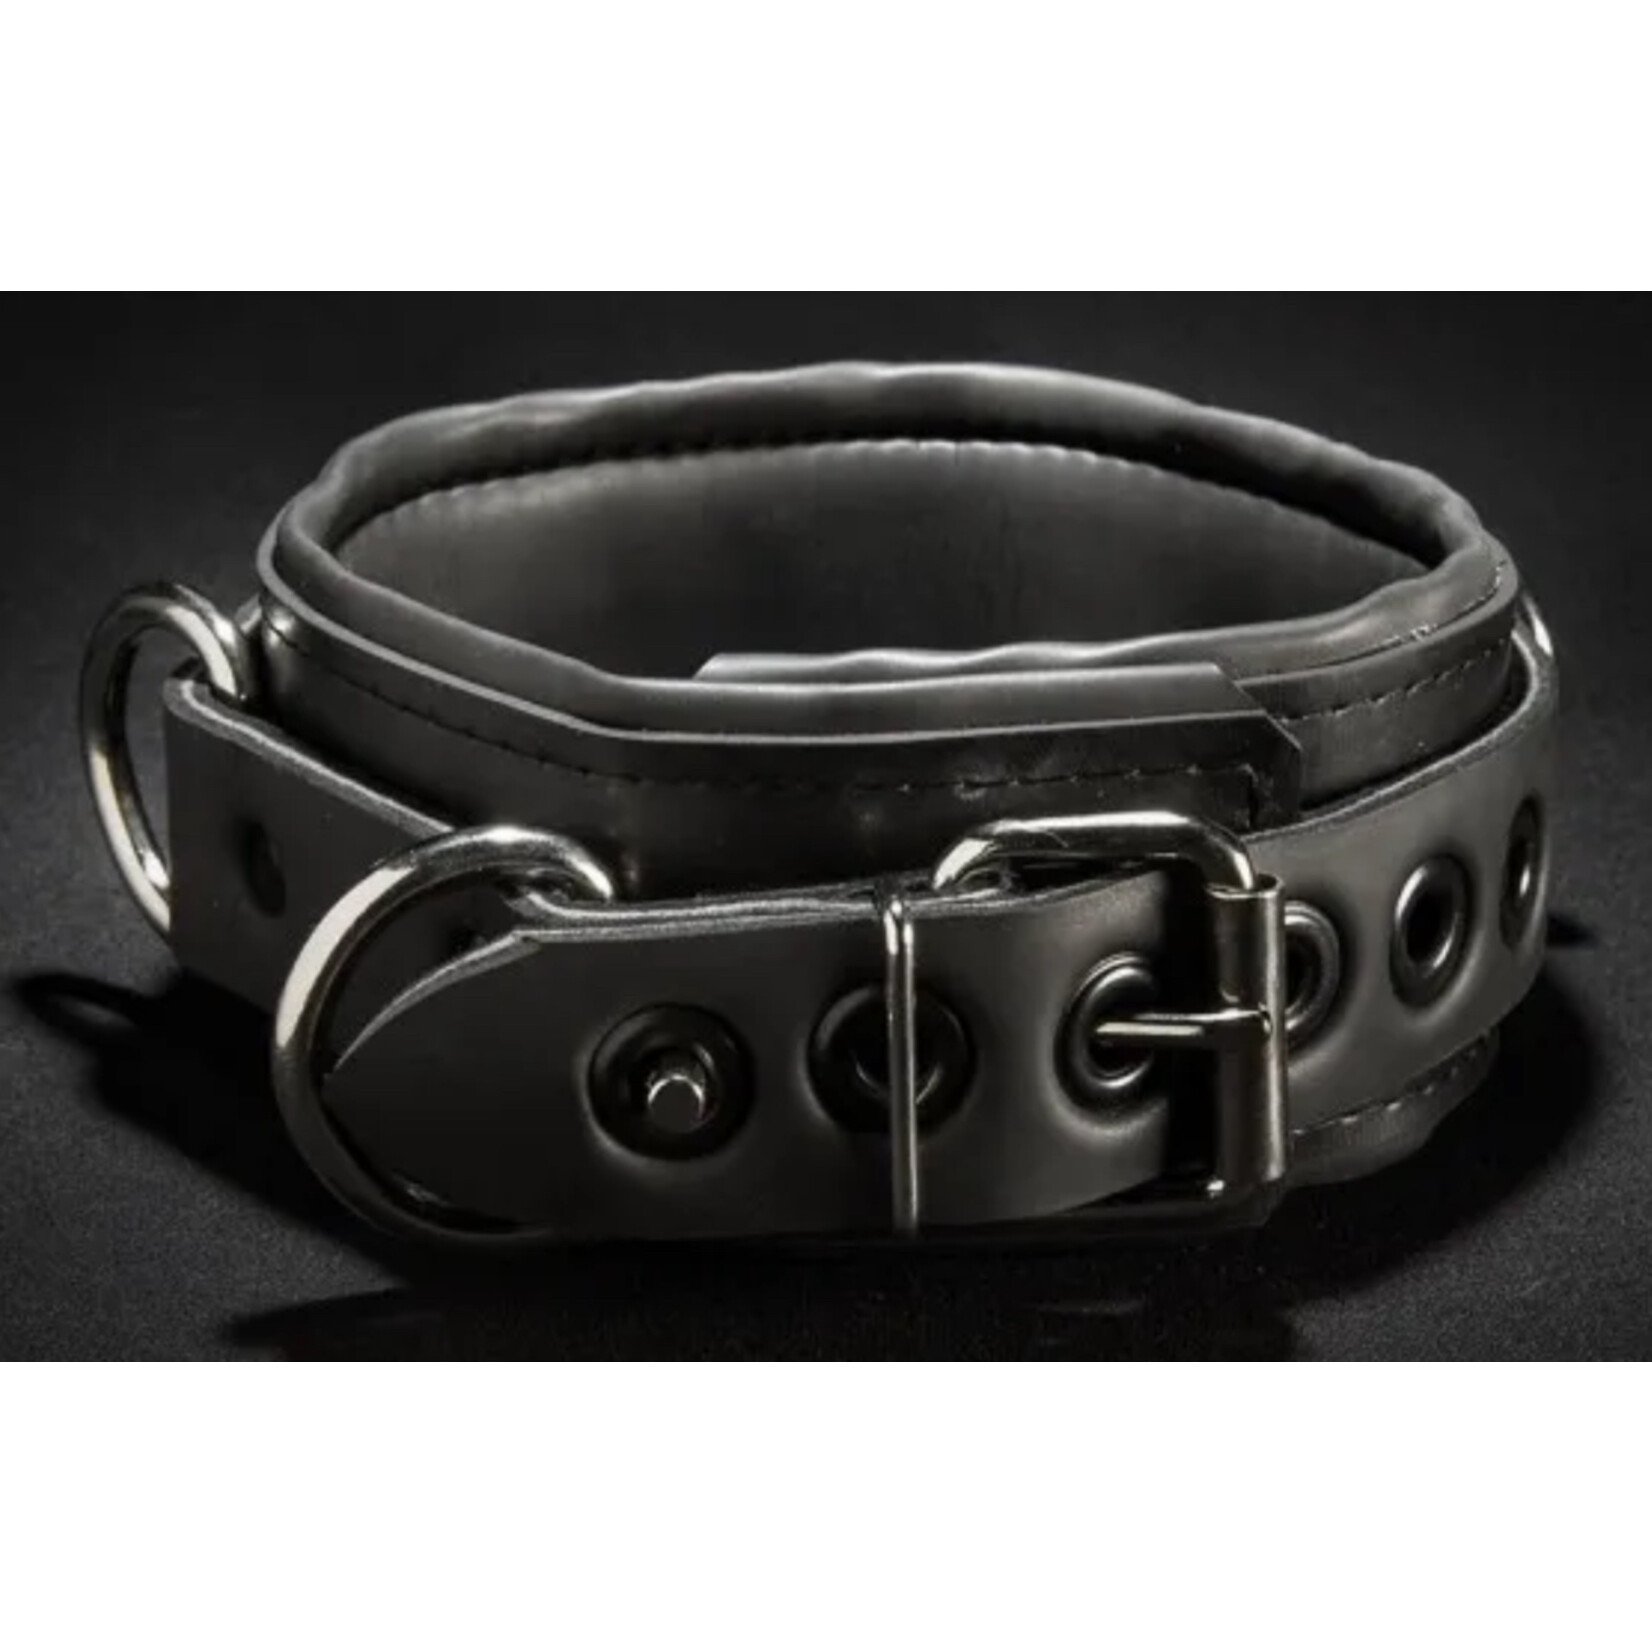 Mr. S Leather Mr. S Leather - Neoprene Locking Bondage Collar - Black